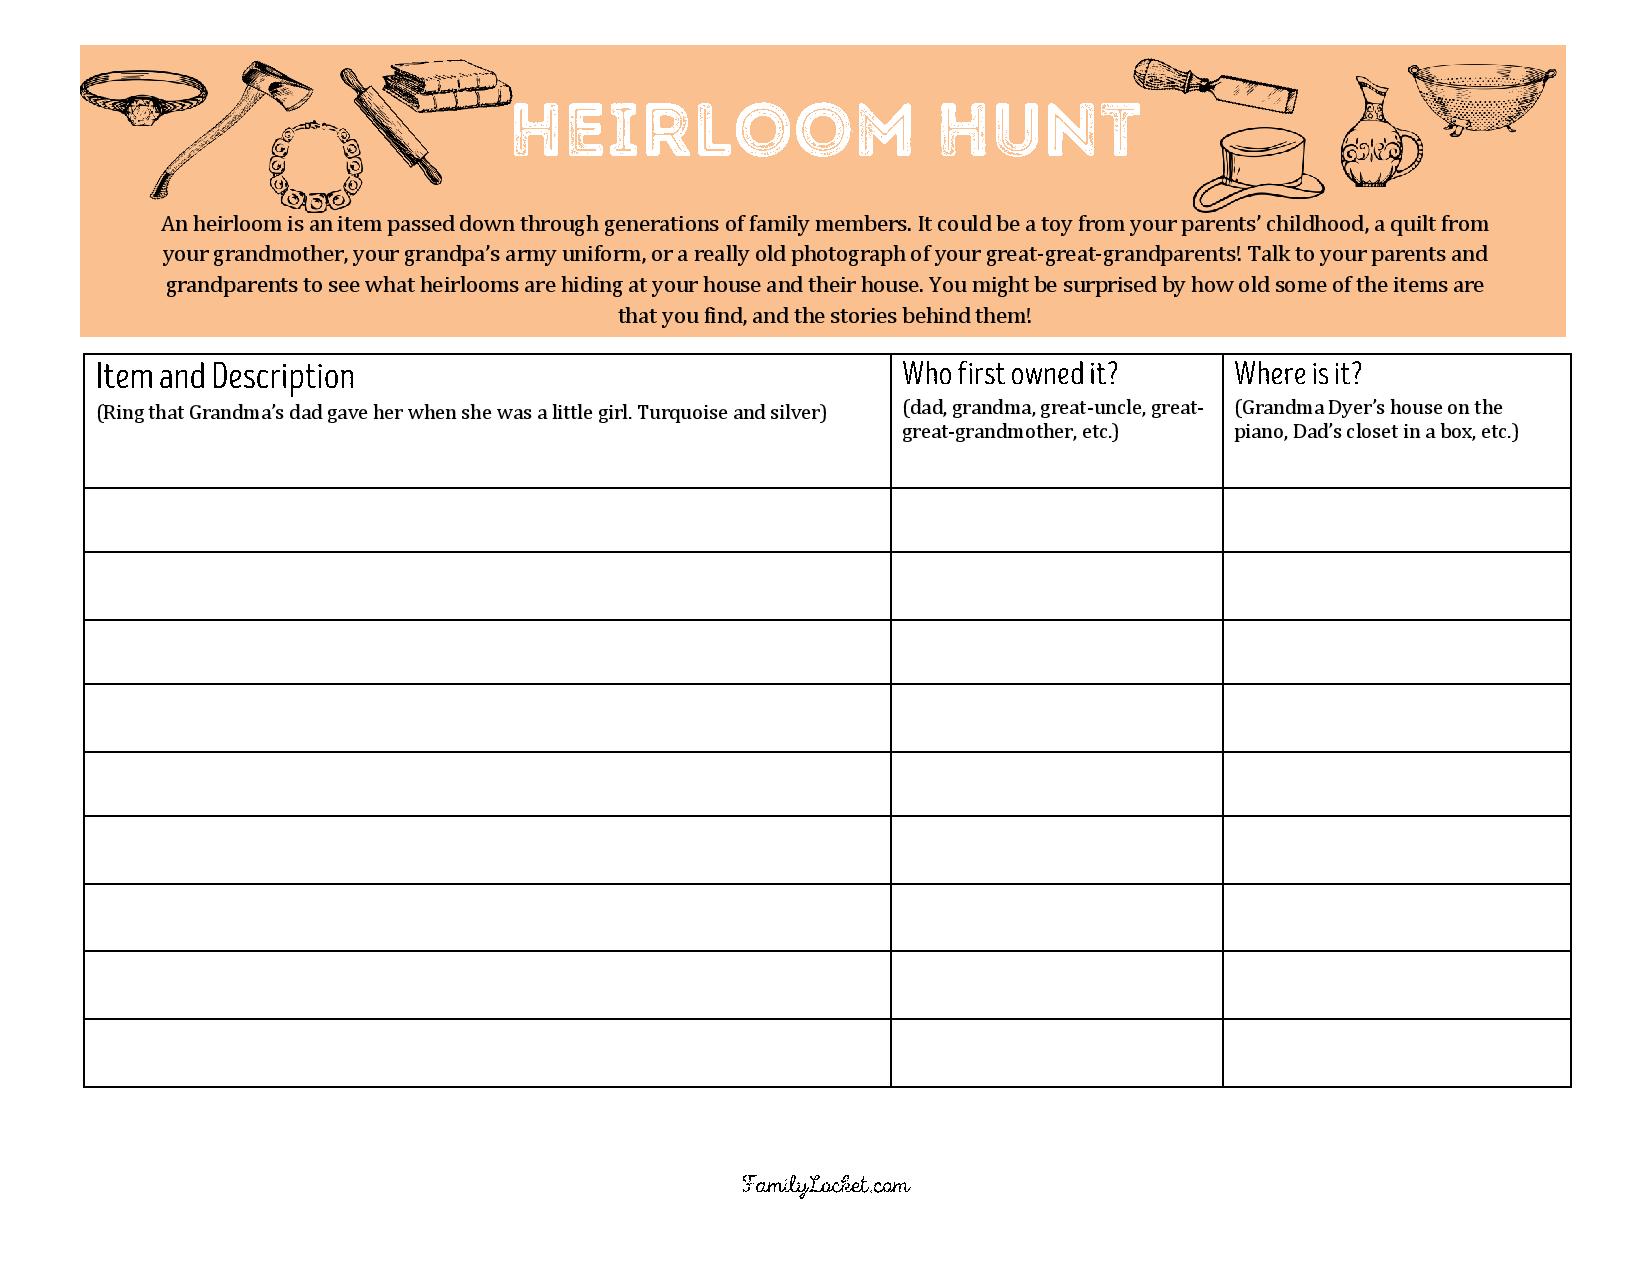 Heirloom-Hunt-blue-and-orange-page-002